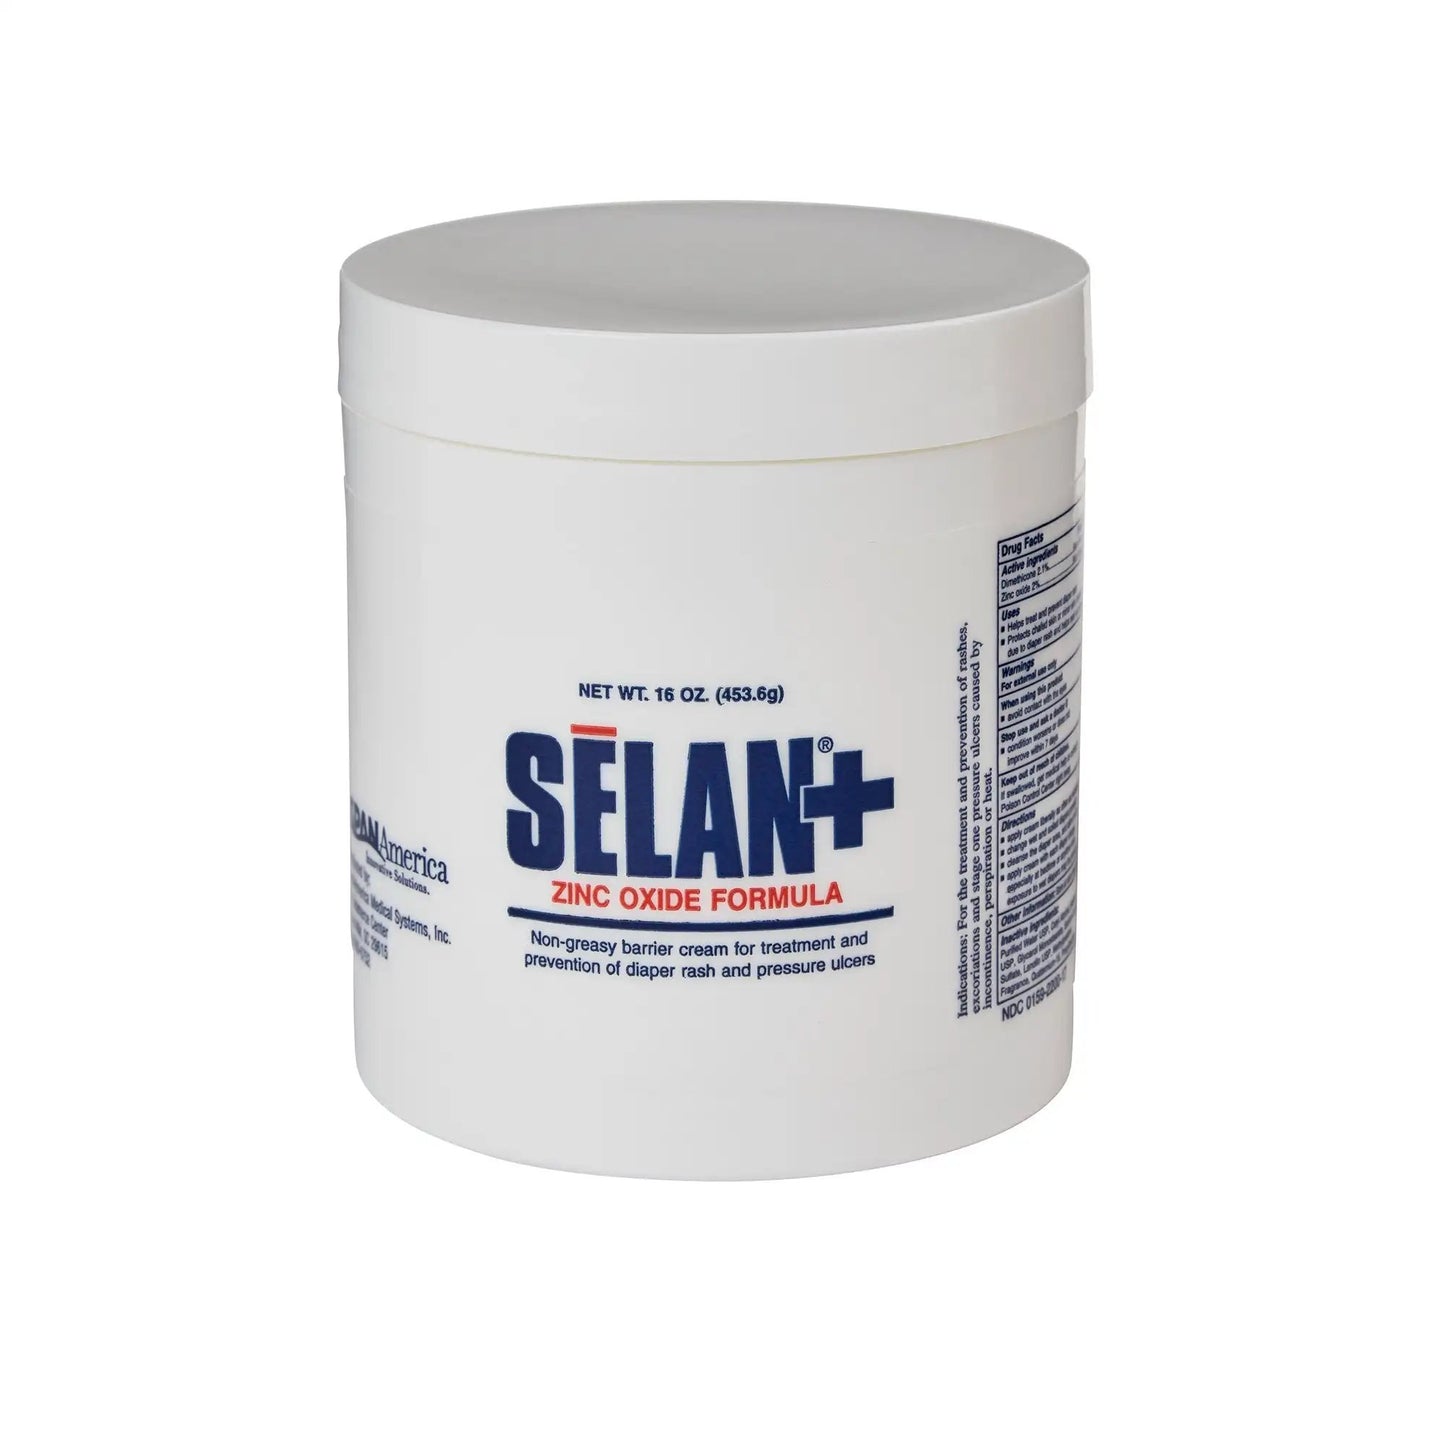 Span America Selan+ Skin Protectant 16 oz. Jar